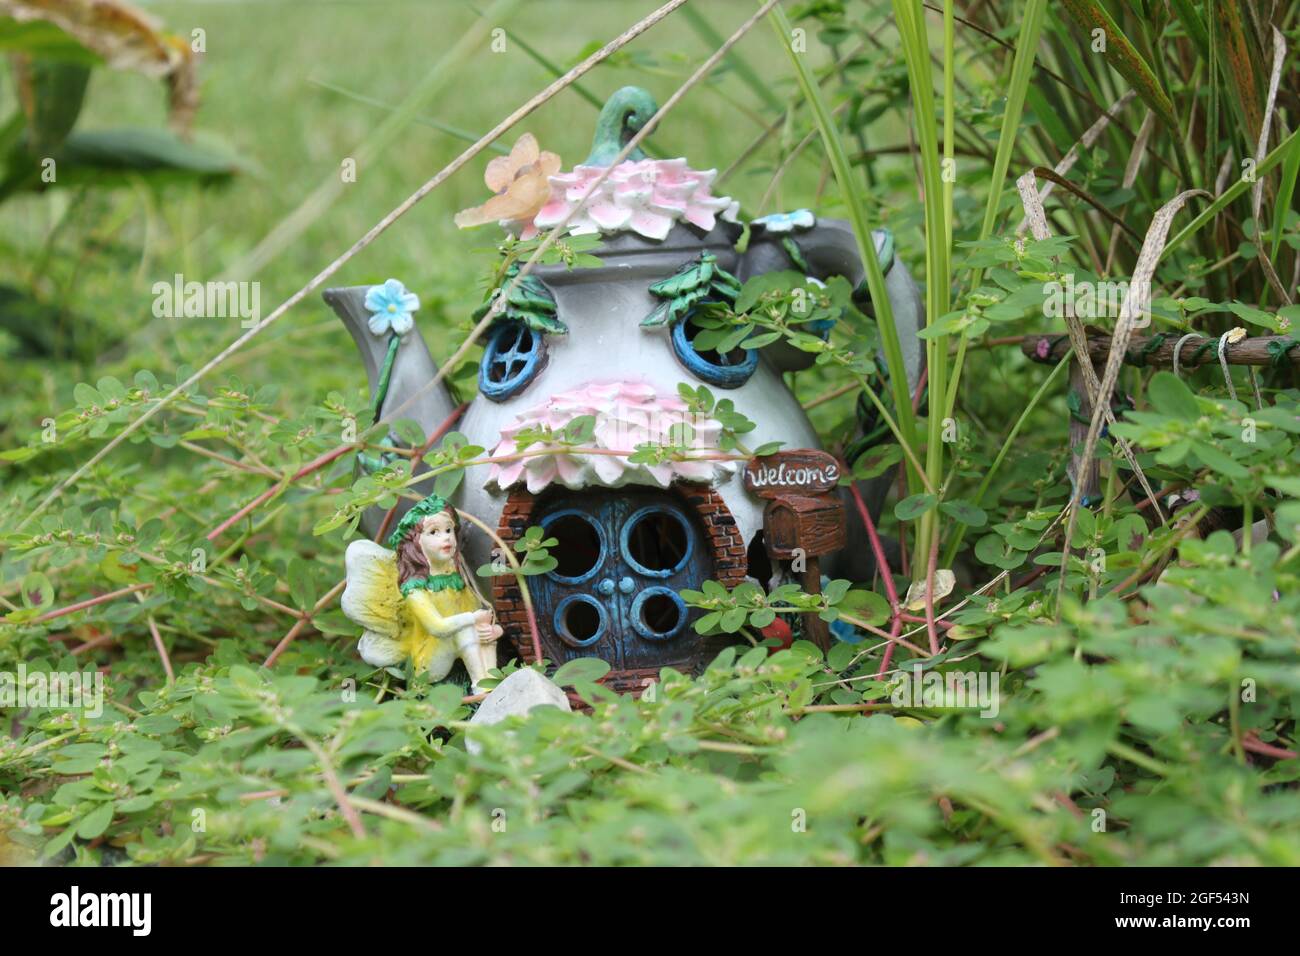 Fairy garden house in overgrown rock garden Stock Photo